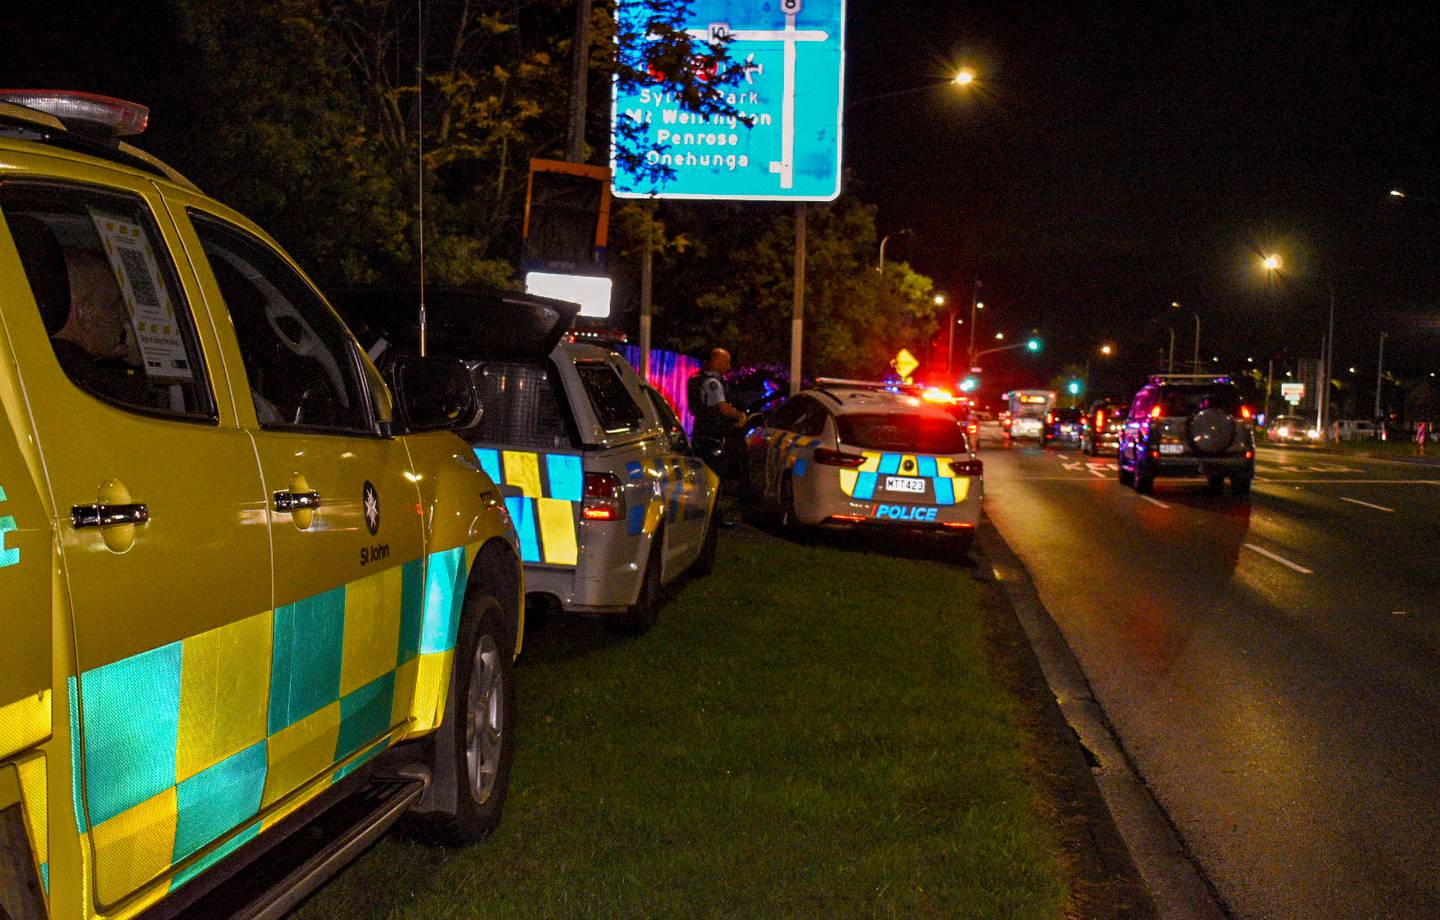 Police are responding to an incident on Tiraumea Drive, Pakuranga, Auckland. Photo / Darren Masters